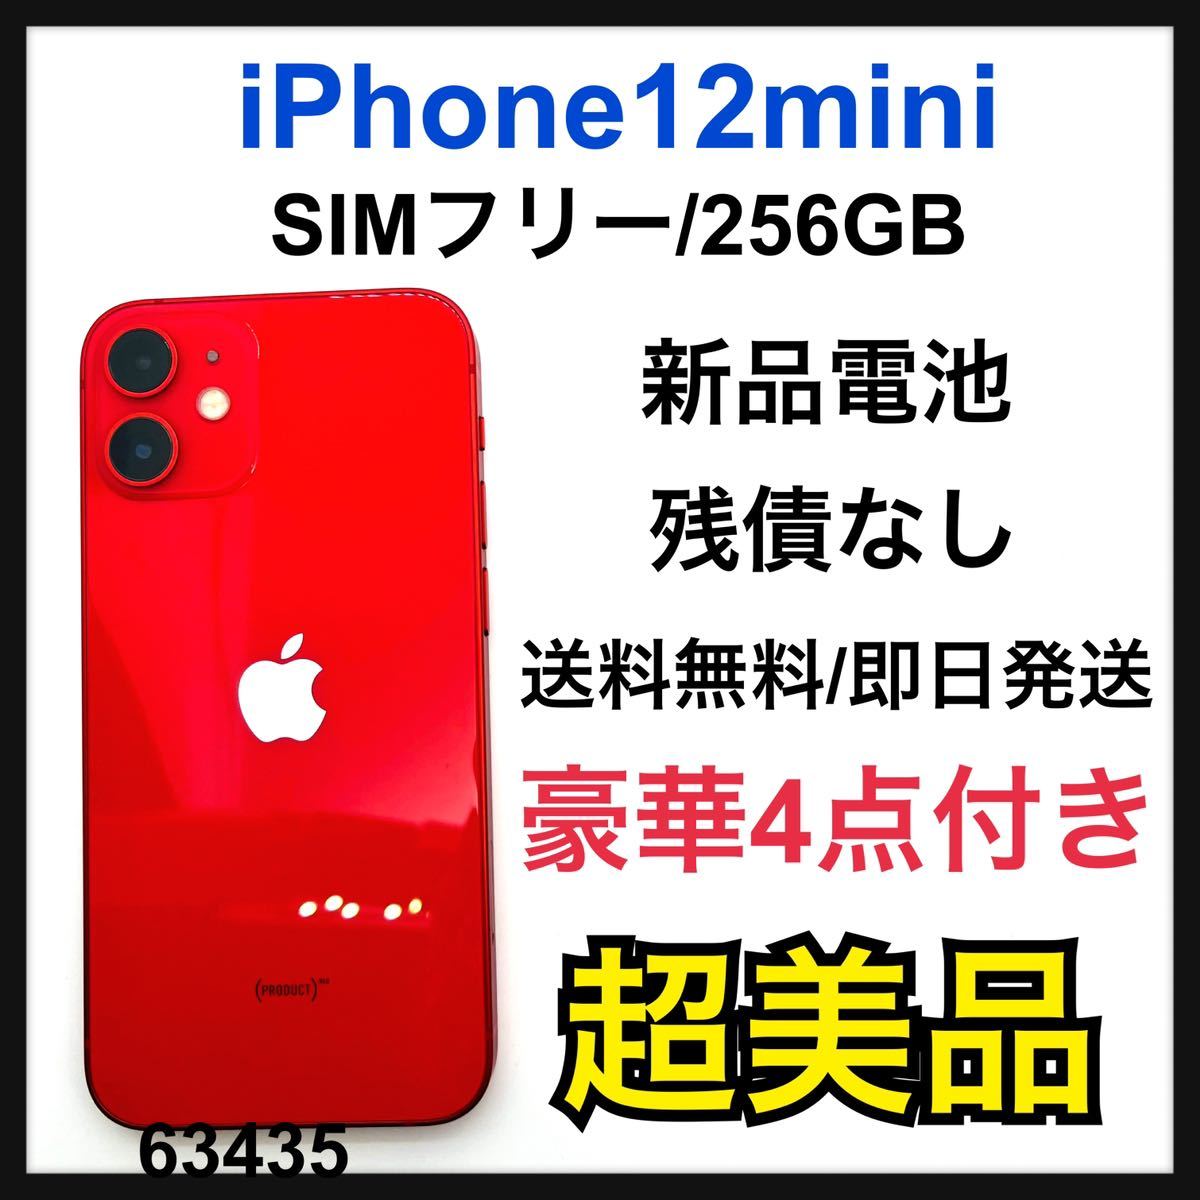 S 新品電池 iPhone 12 mini レッド 256 GB SIMフリー｜PayPayフリマ